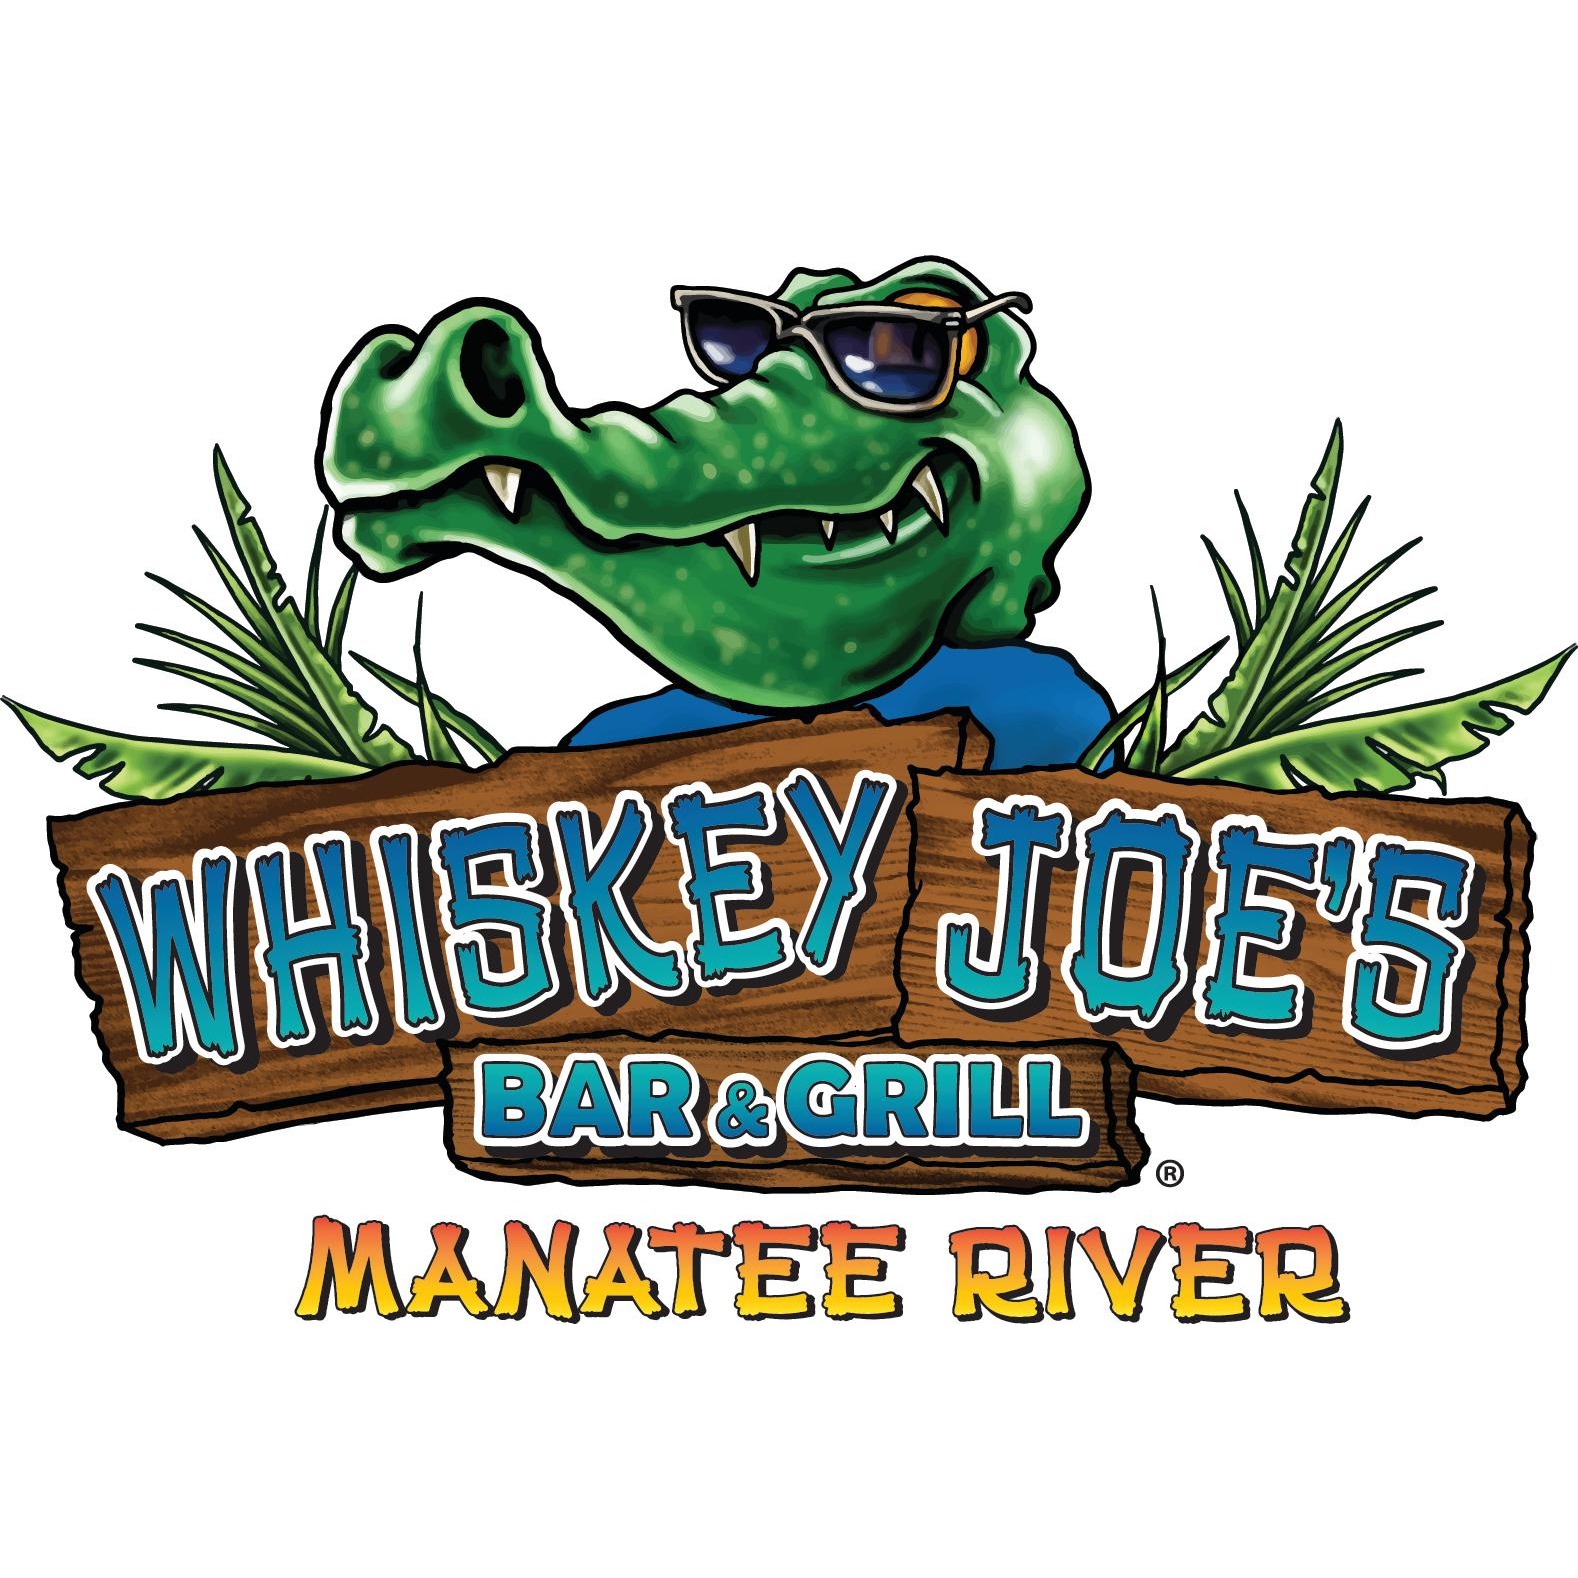 Whiskey Joe's Bar & Grill - Manatee River - Ellenton, FL 34222 - (941)263-3111 | ShowMeLocal.com